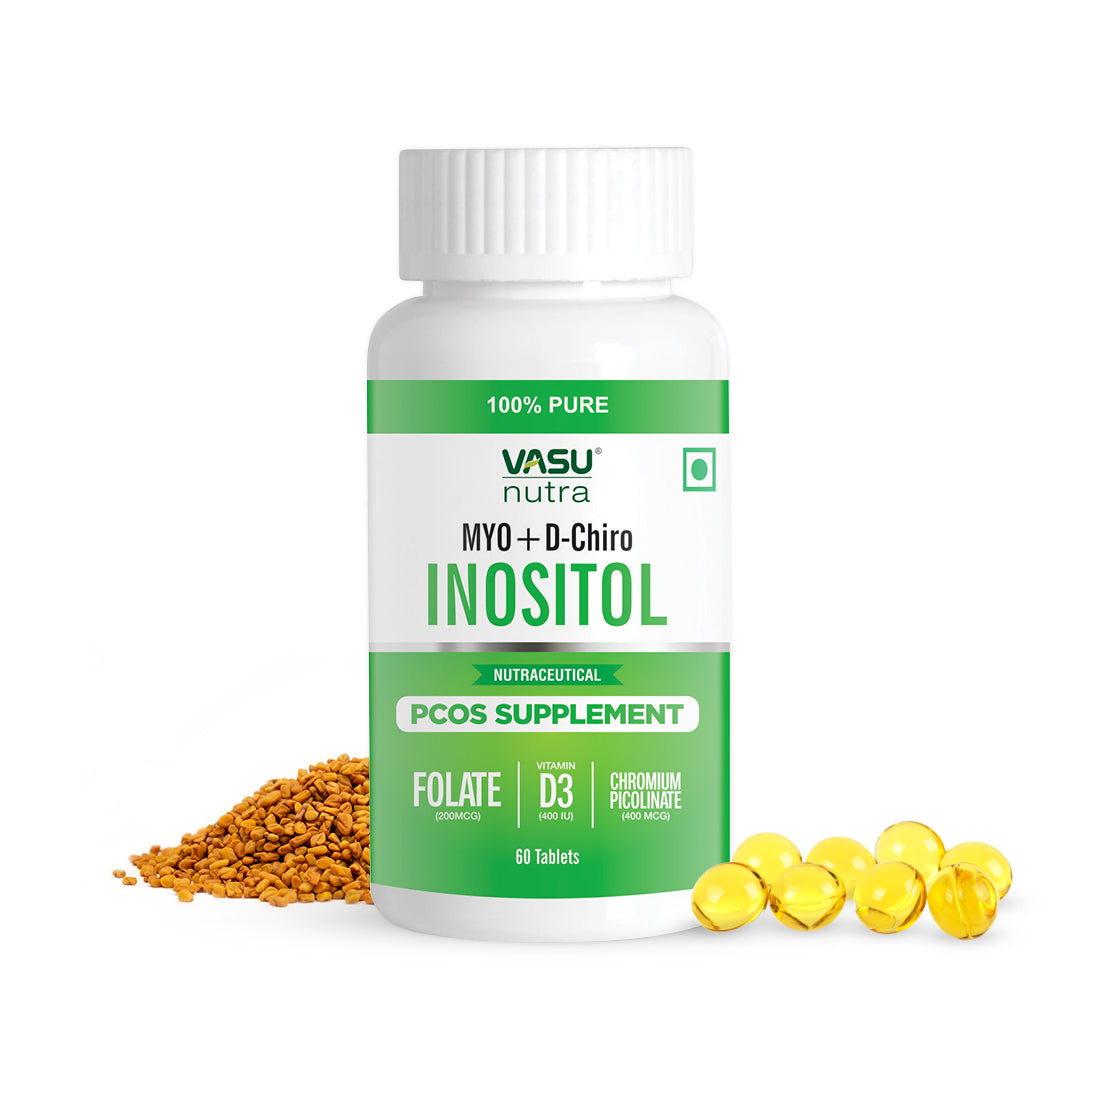 Vasu Nutra PCOS Supplement - 40:1 Ratio Myo-Inositol to D-Chiro Inositol - Fortified with Vitamin D3 & Folic Acid - Regulates Menstrual Cycle - Helps Restore Hormonal & Metabolic Balance - 60 Tablets